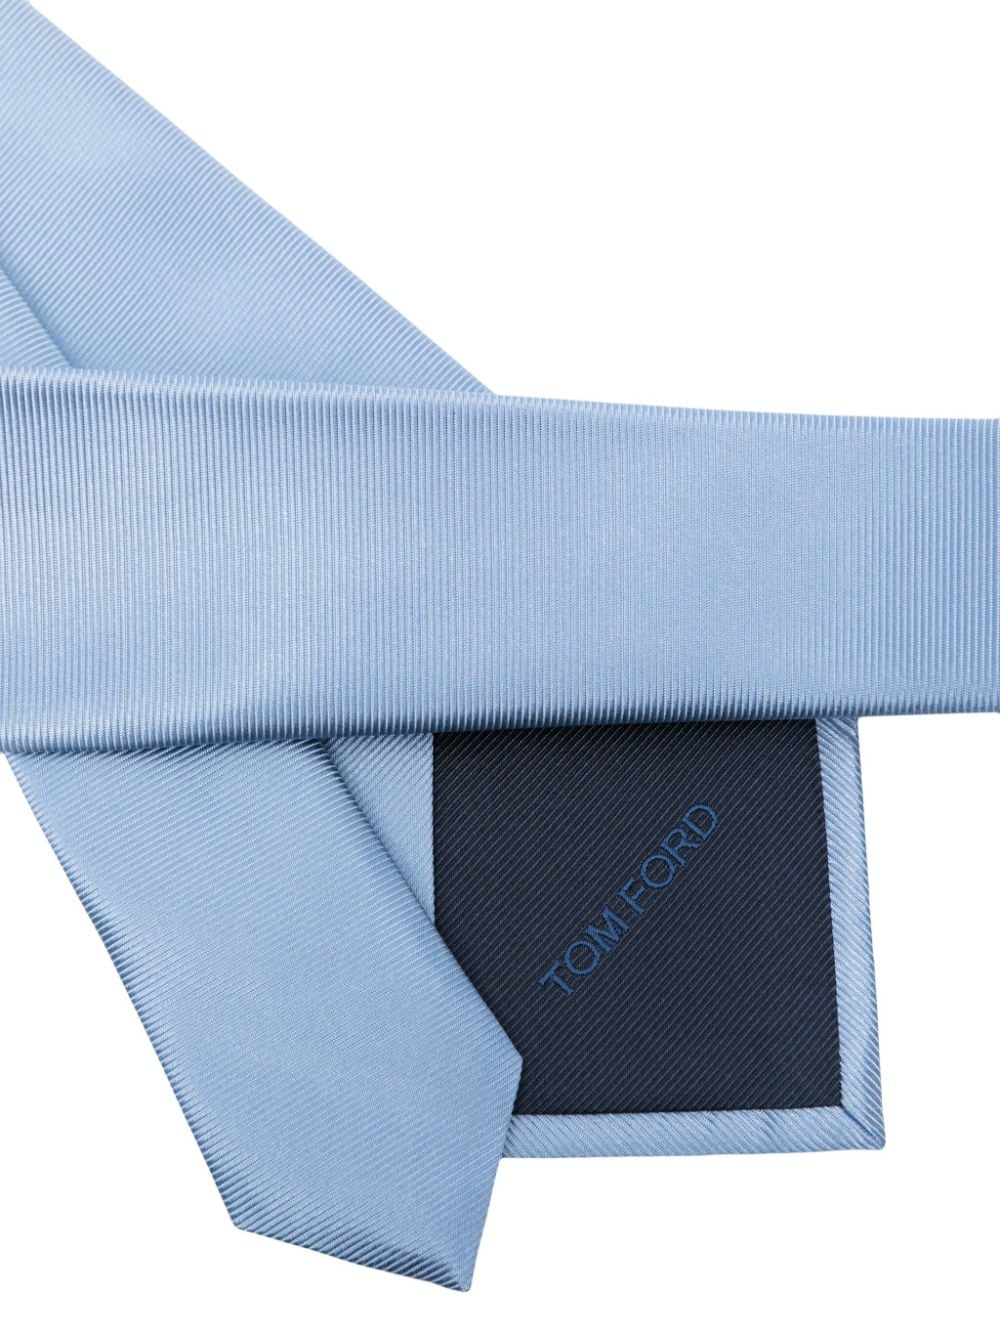 TOM FORD stripe-jacquard silk tie - Blauw